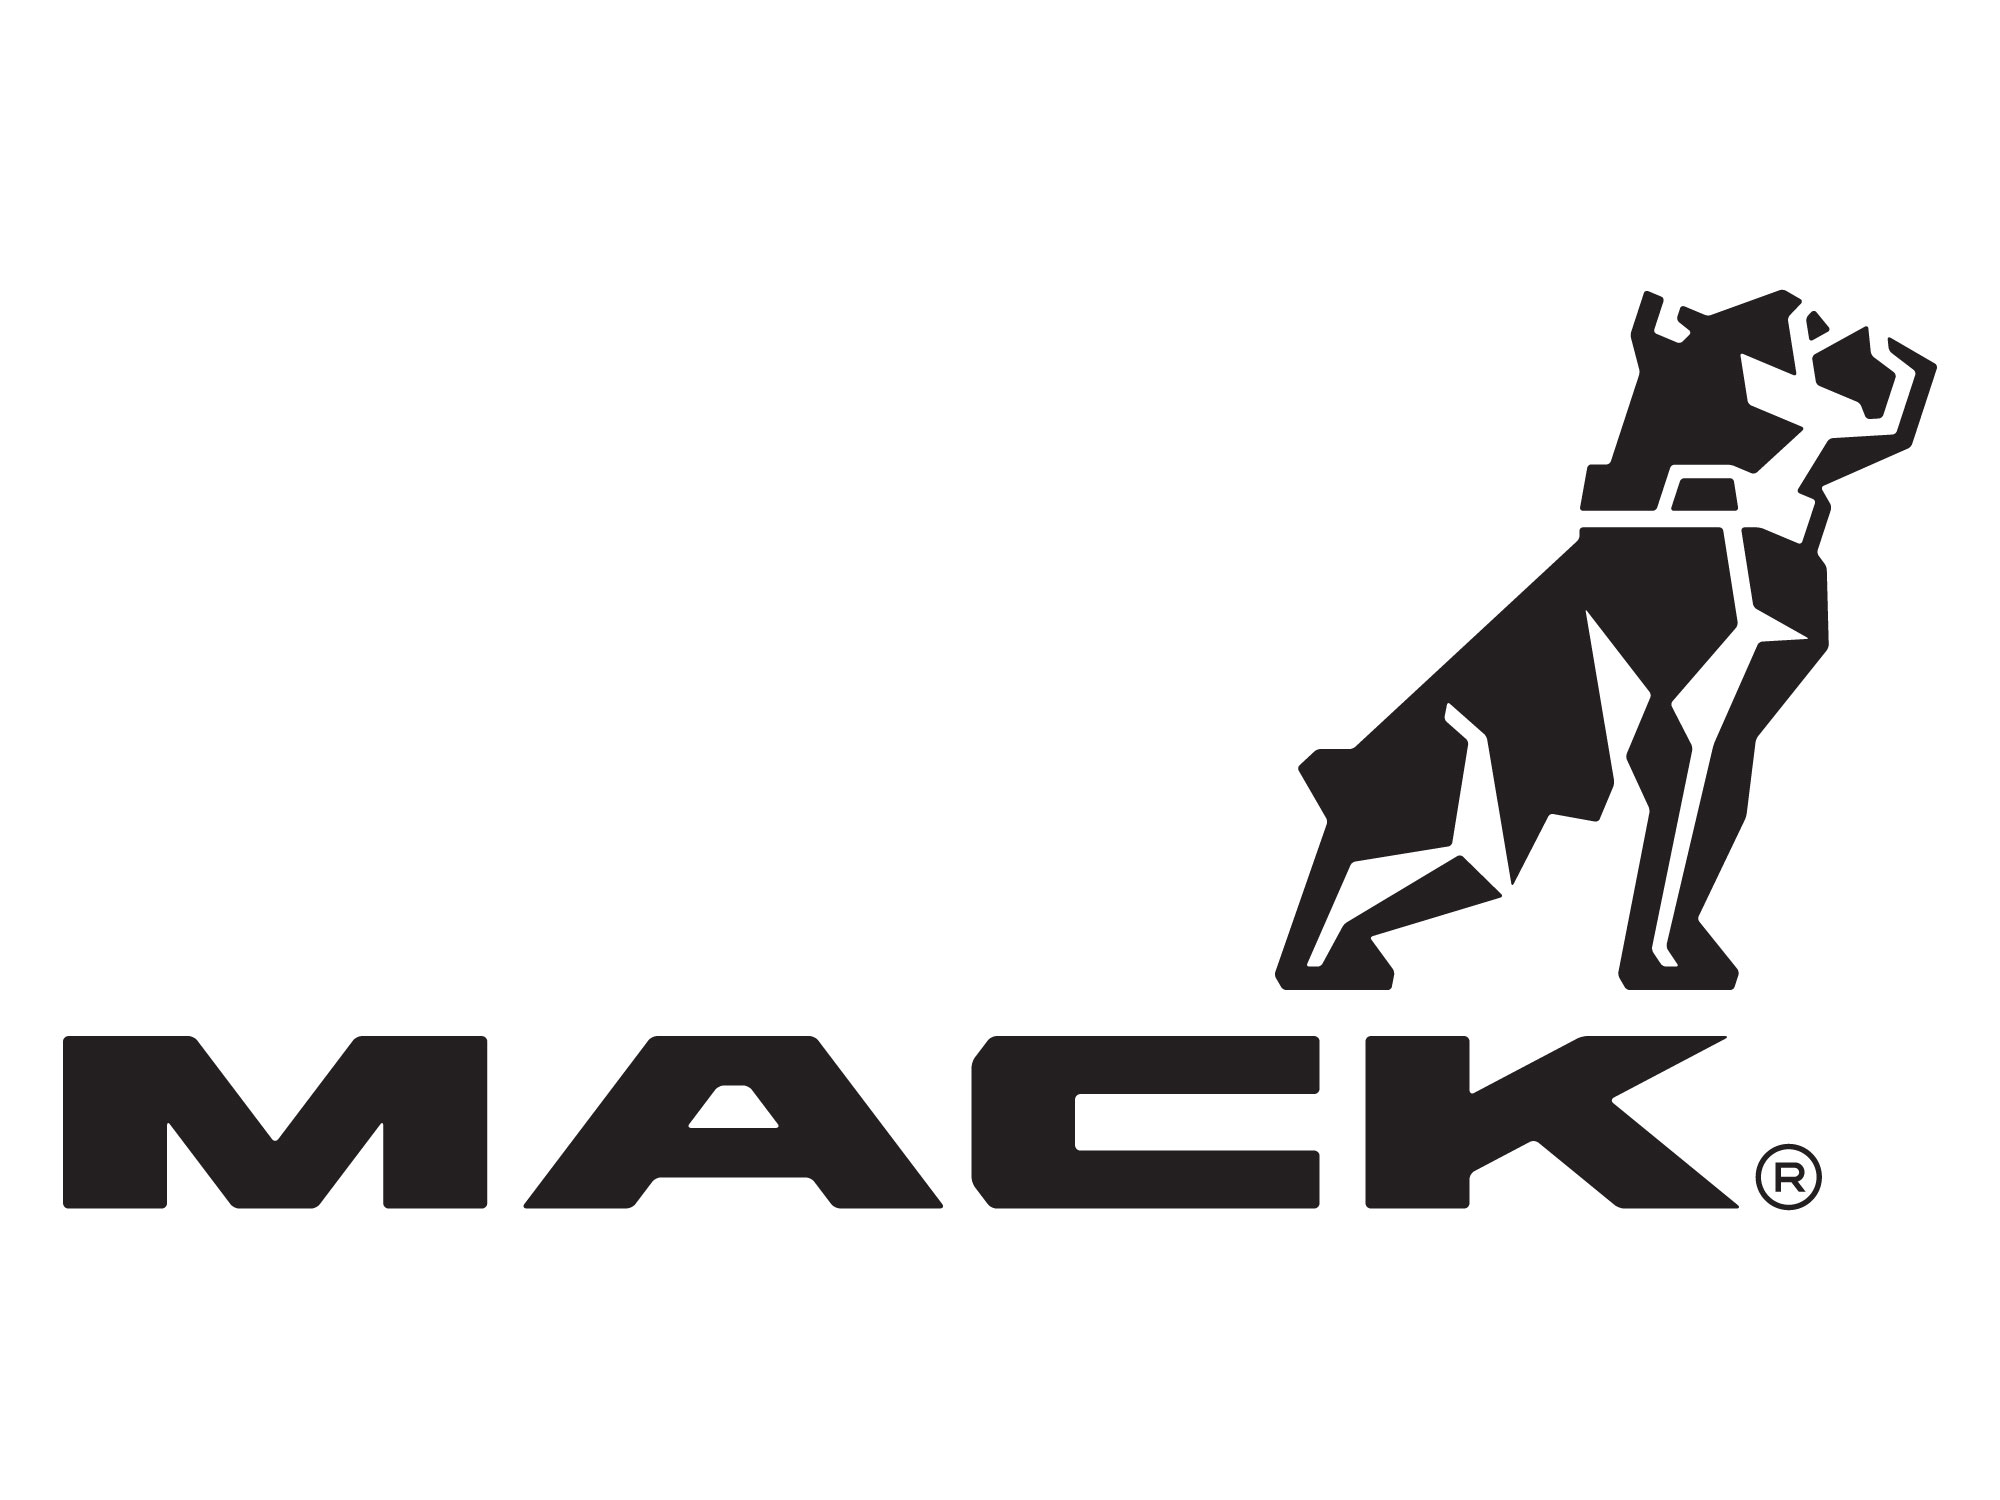 Mack Dog Logo - Mack announces rebranding effort, new logo at ConExpo